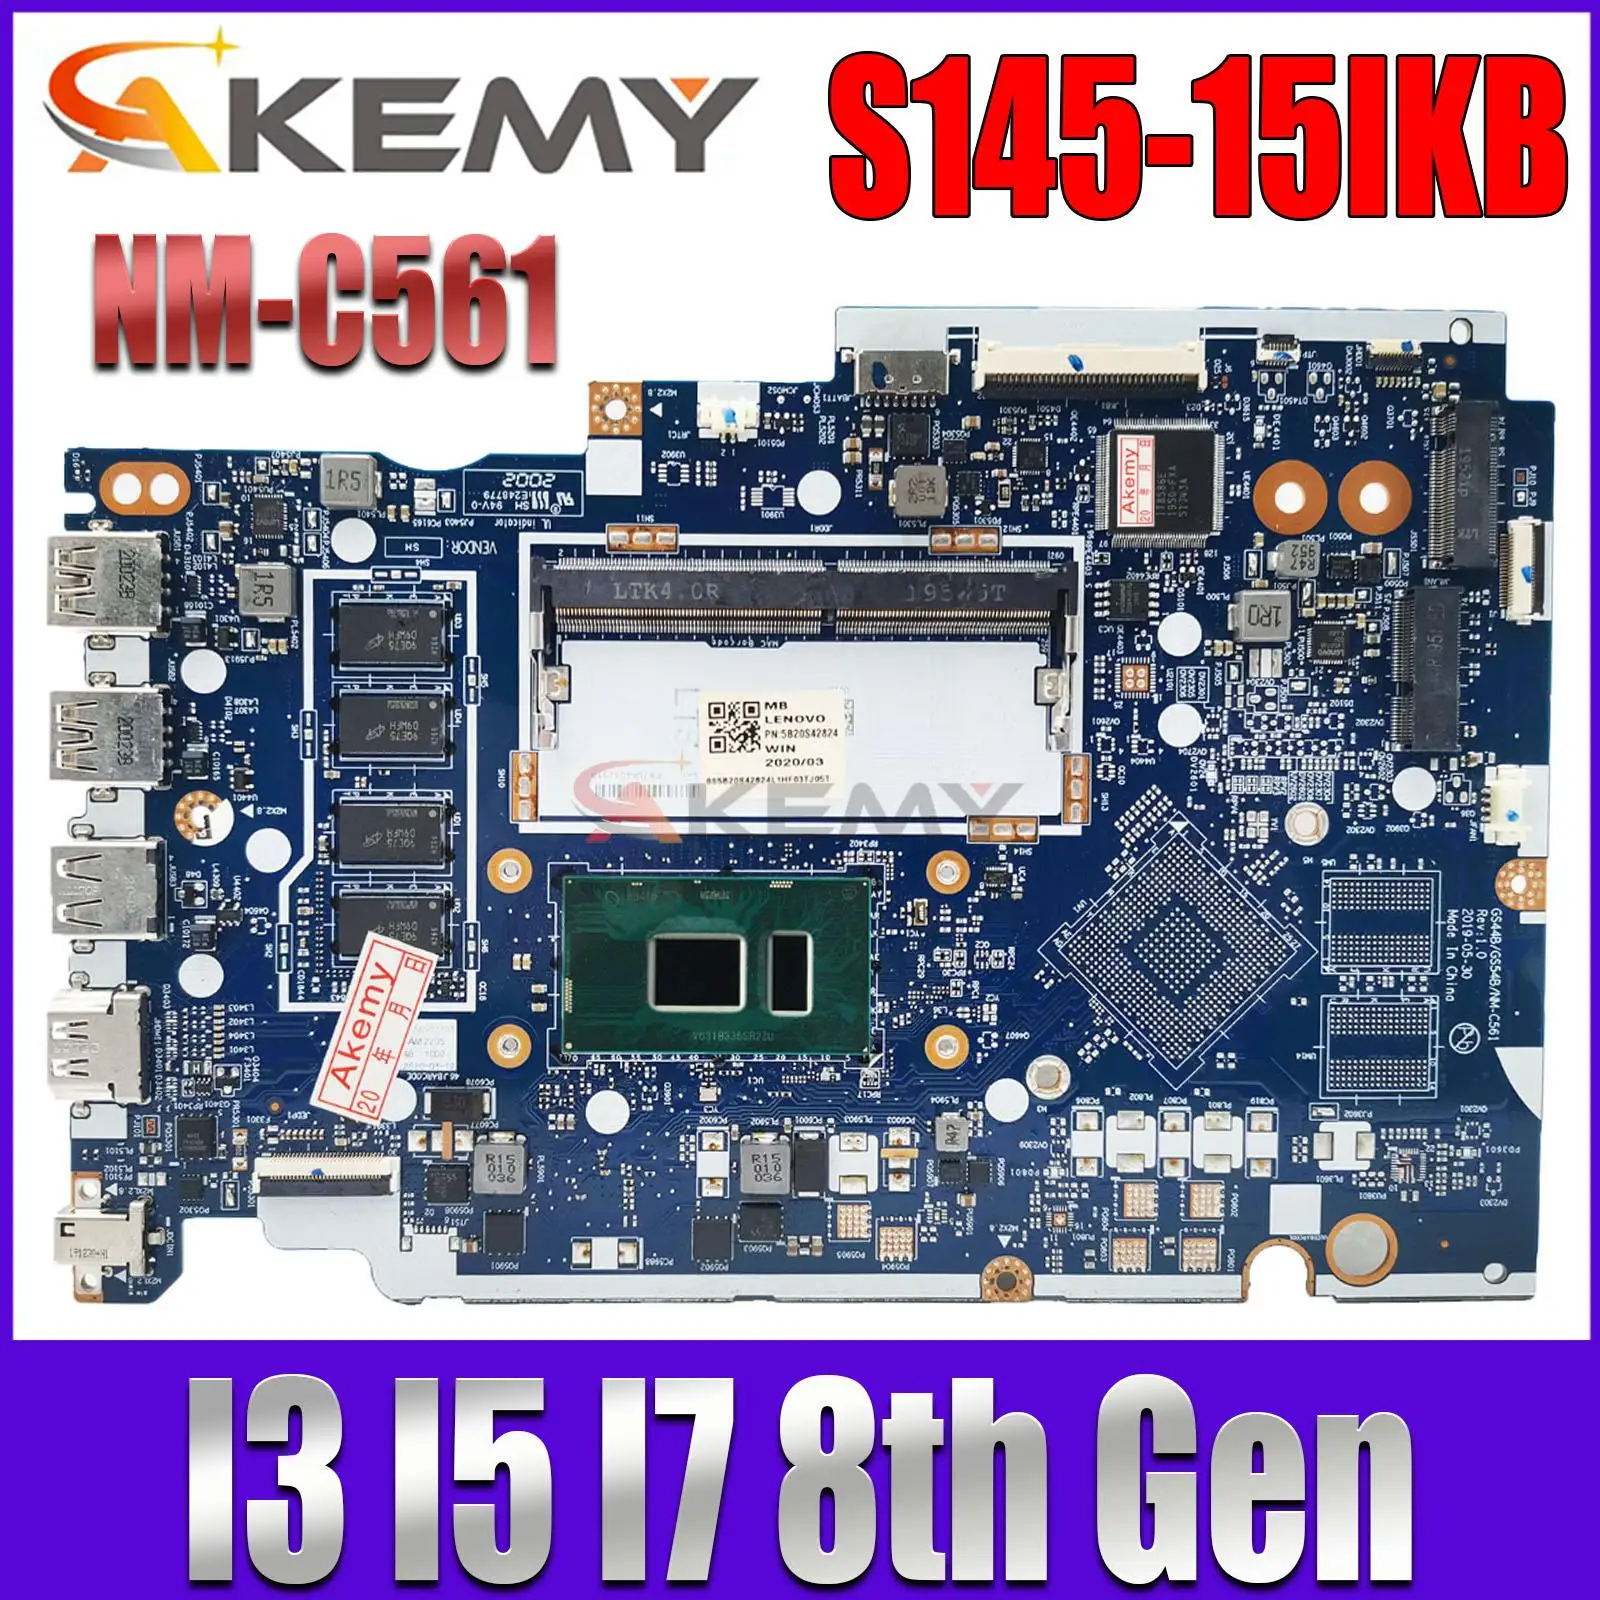 

GS44B GS54B NM-C561 Motherboard.For ideapad S145-15IKB V15-IKB otebook Motherboard.With I3/I5/I7 CPU.4GB RAM.100% test work